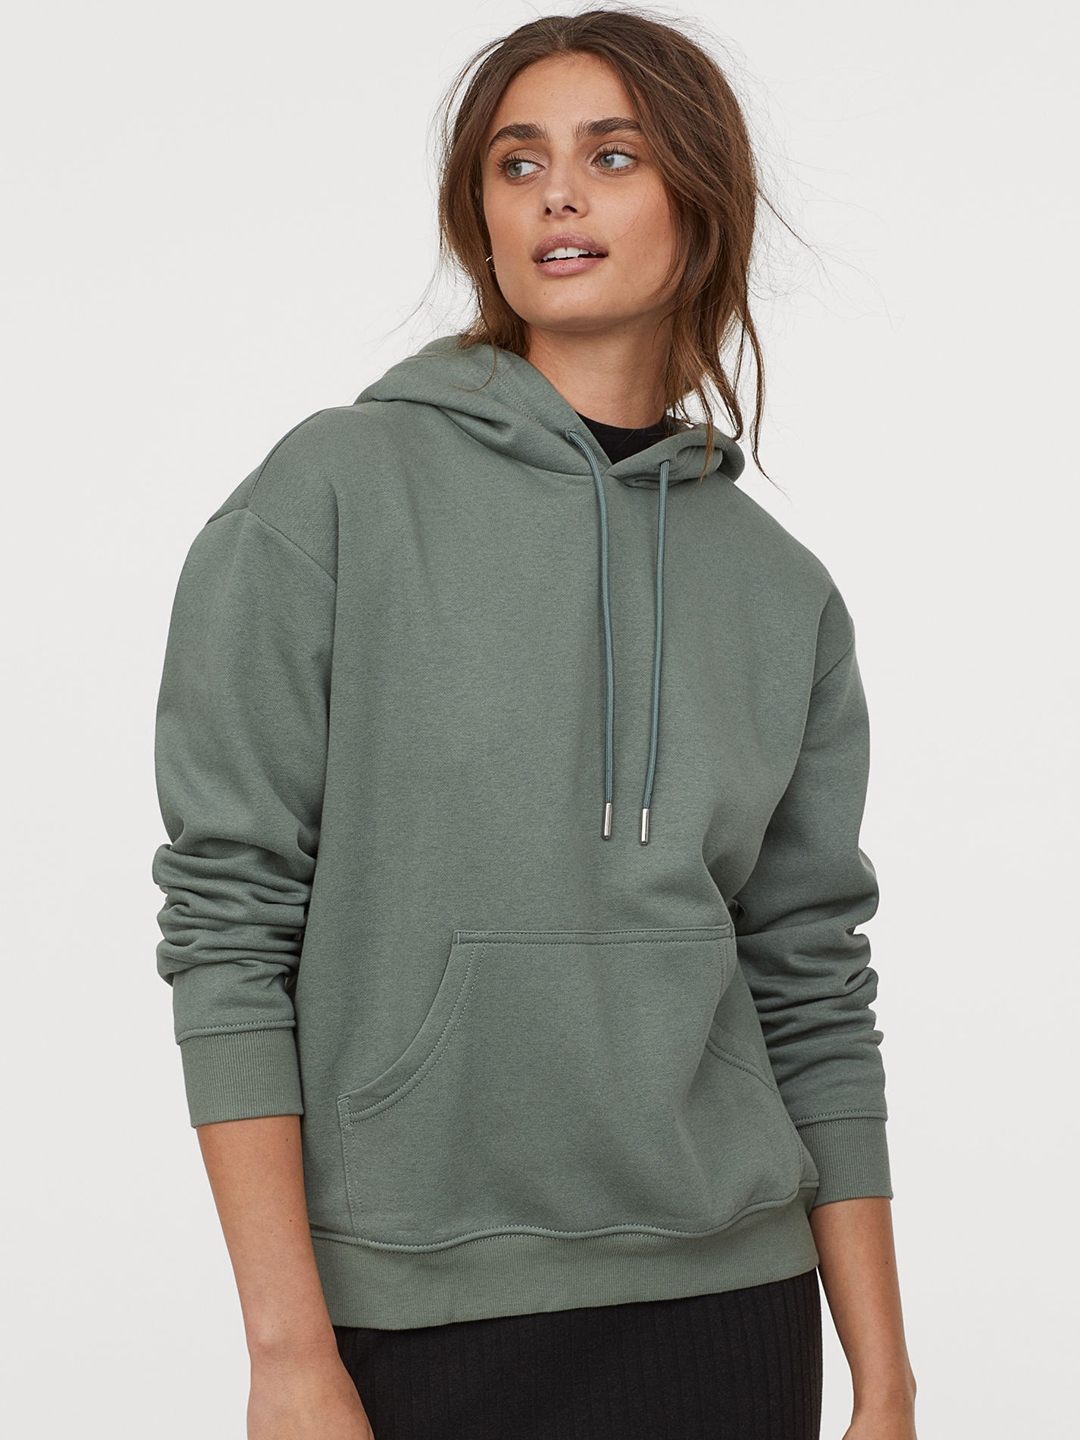 Buy H&M Women Green Hooded Top - Sweatshirts for Women 10816450 | Myntra